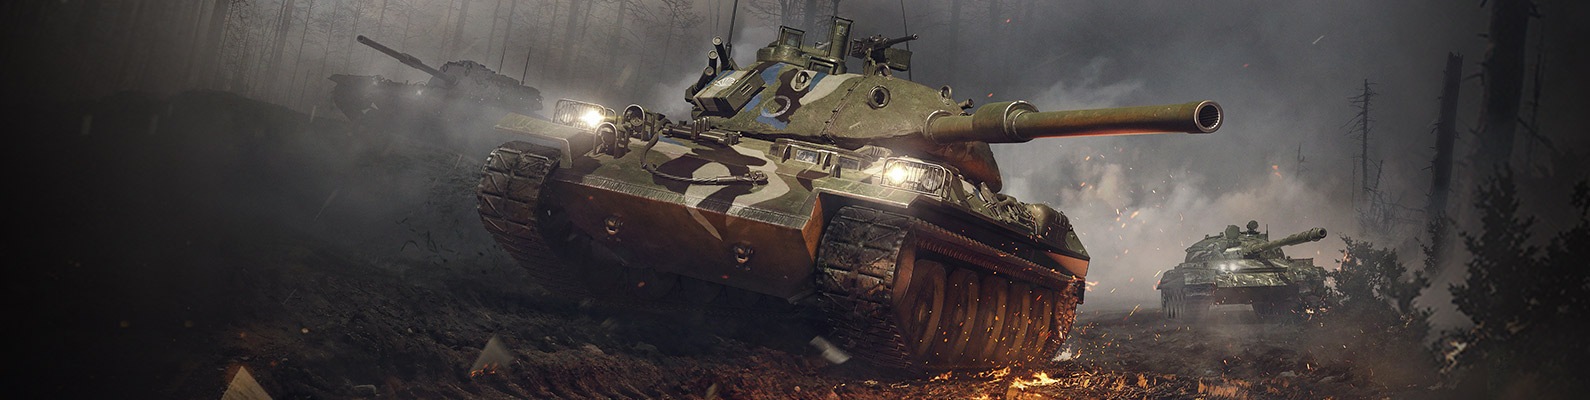 Картинки для кланов в world of tanks   подборка (24)